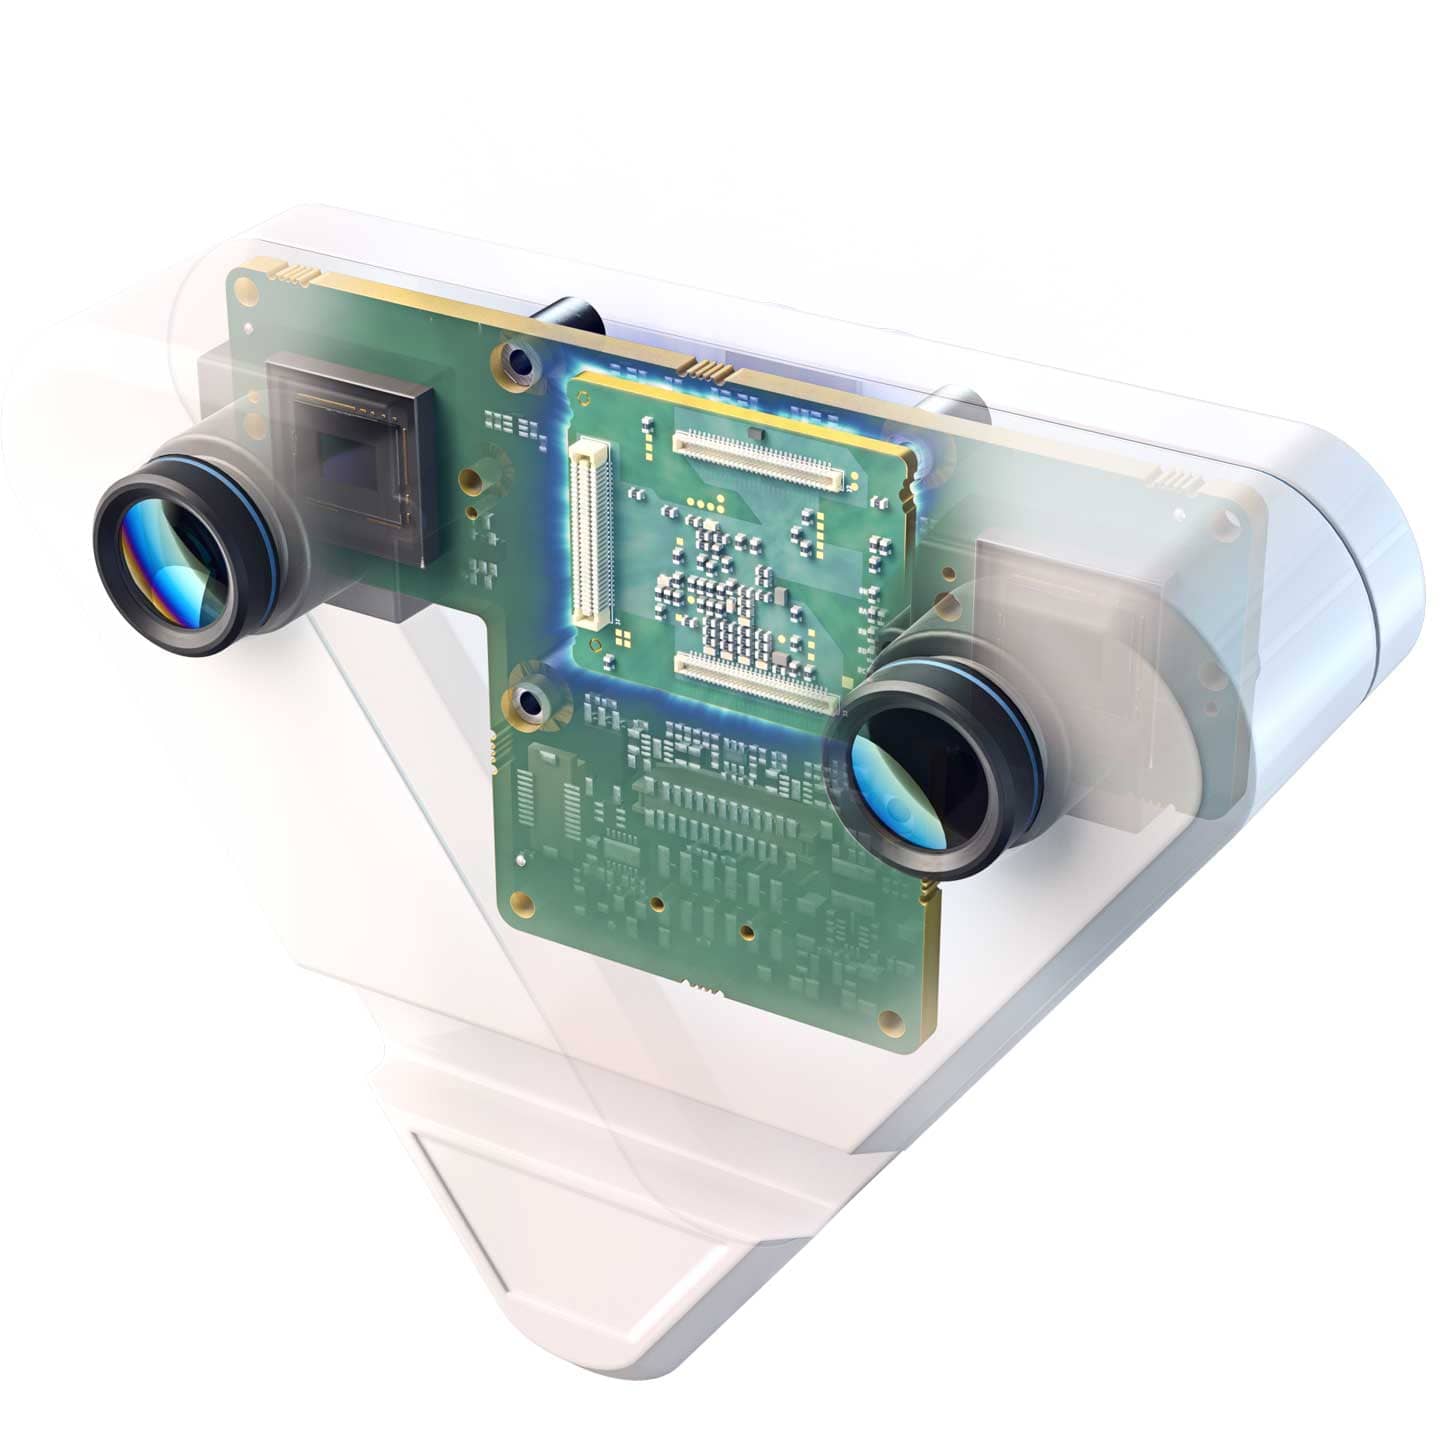 Stereokamera für Embedded Vision - VC Stereo Cam mit Gehäuse